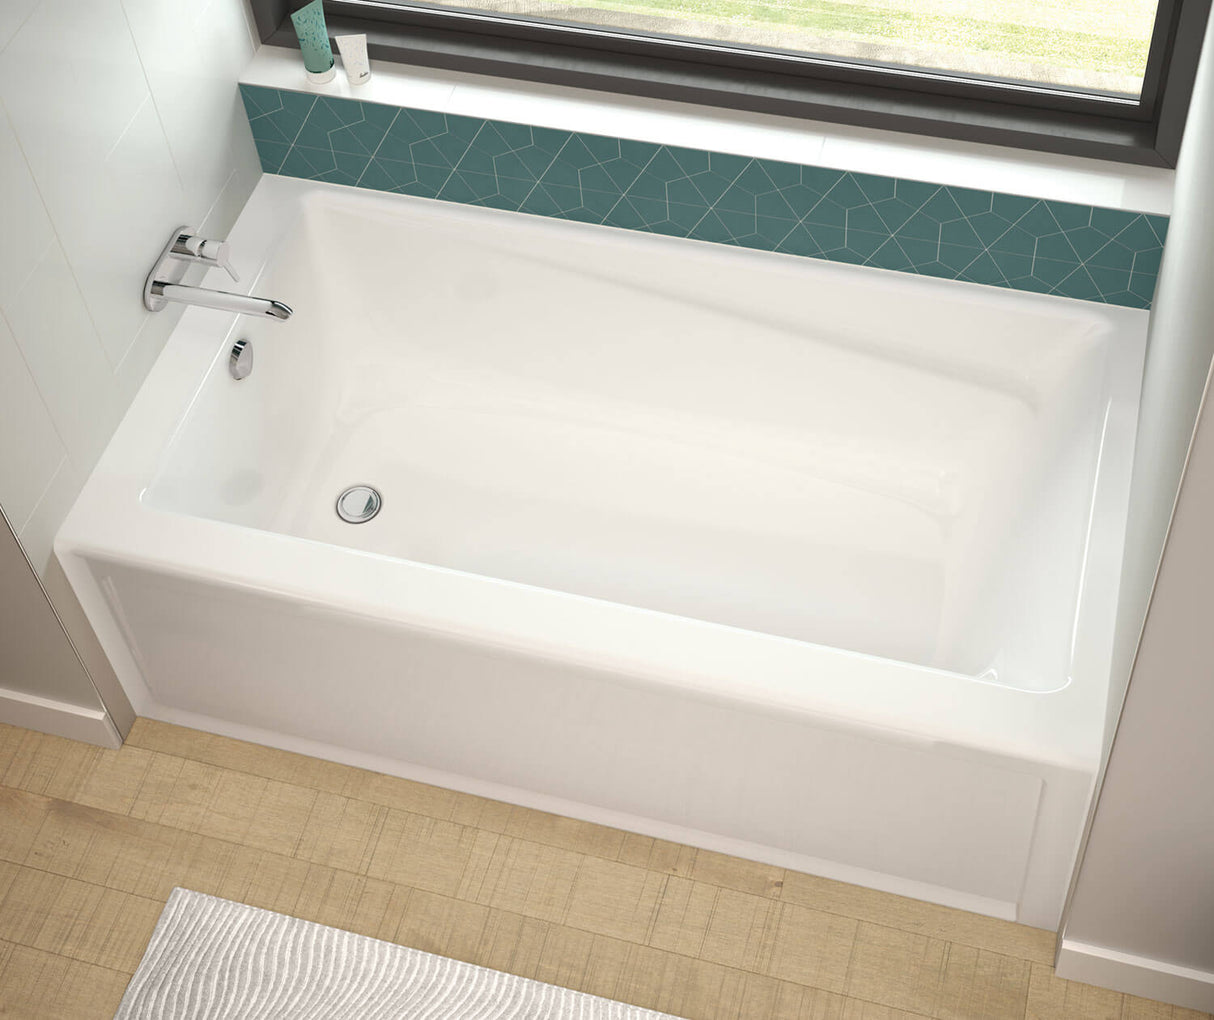 MAAX 106222-L-097-001 Exhibit 6632 IFS AFR Acrylic Alcove Left-Hand Drain Combined Whirlpool & Aeroeffect Bathtub in White